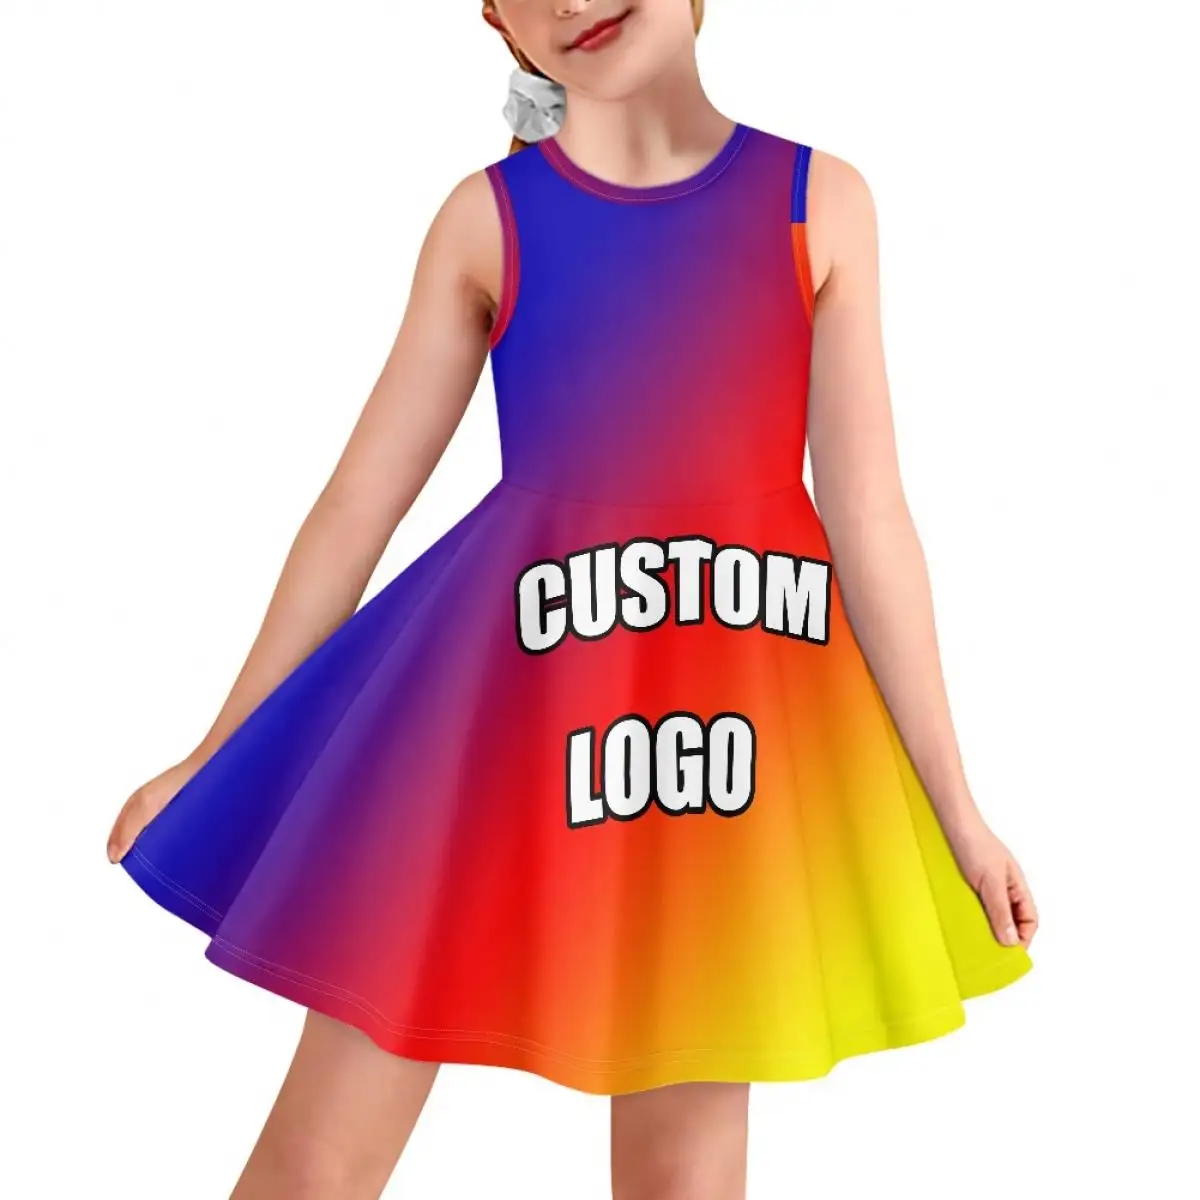 Factory Wholesale Kids Dresses for Girls of 10-11 yrs Low MOQ Customize Print Sleeveless Dress Summer Beach Casual Sundress